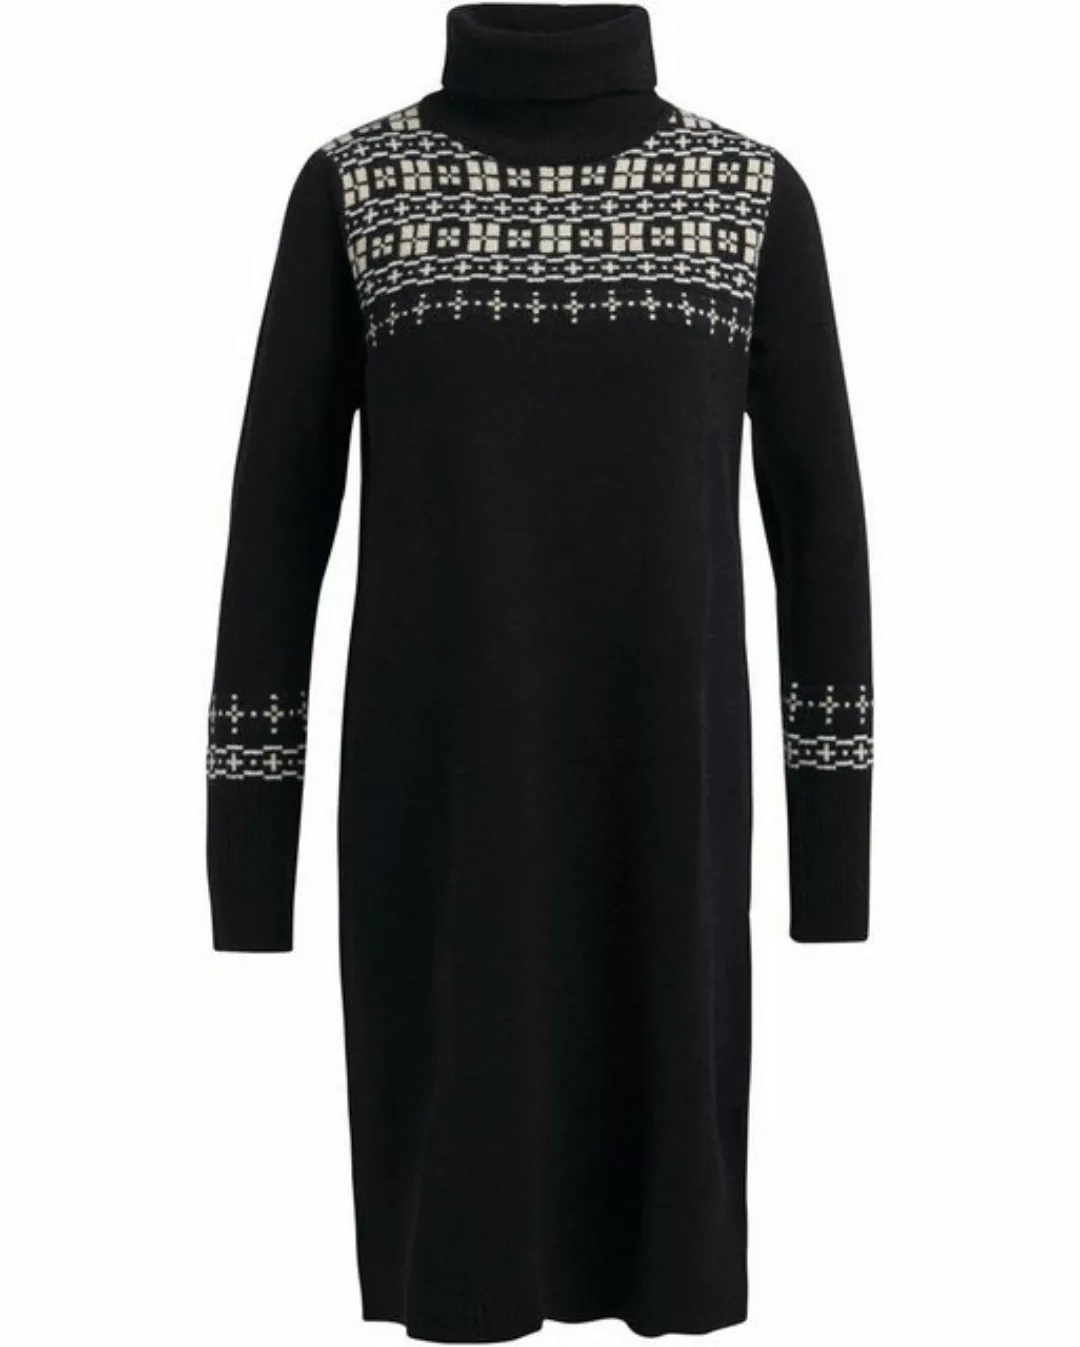 Barbour Midikleid Rollkragenkleid Herring Knit Dress günstig online kaufen